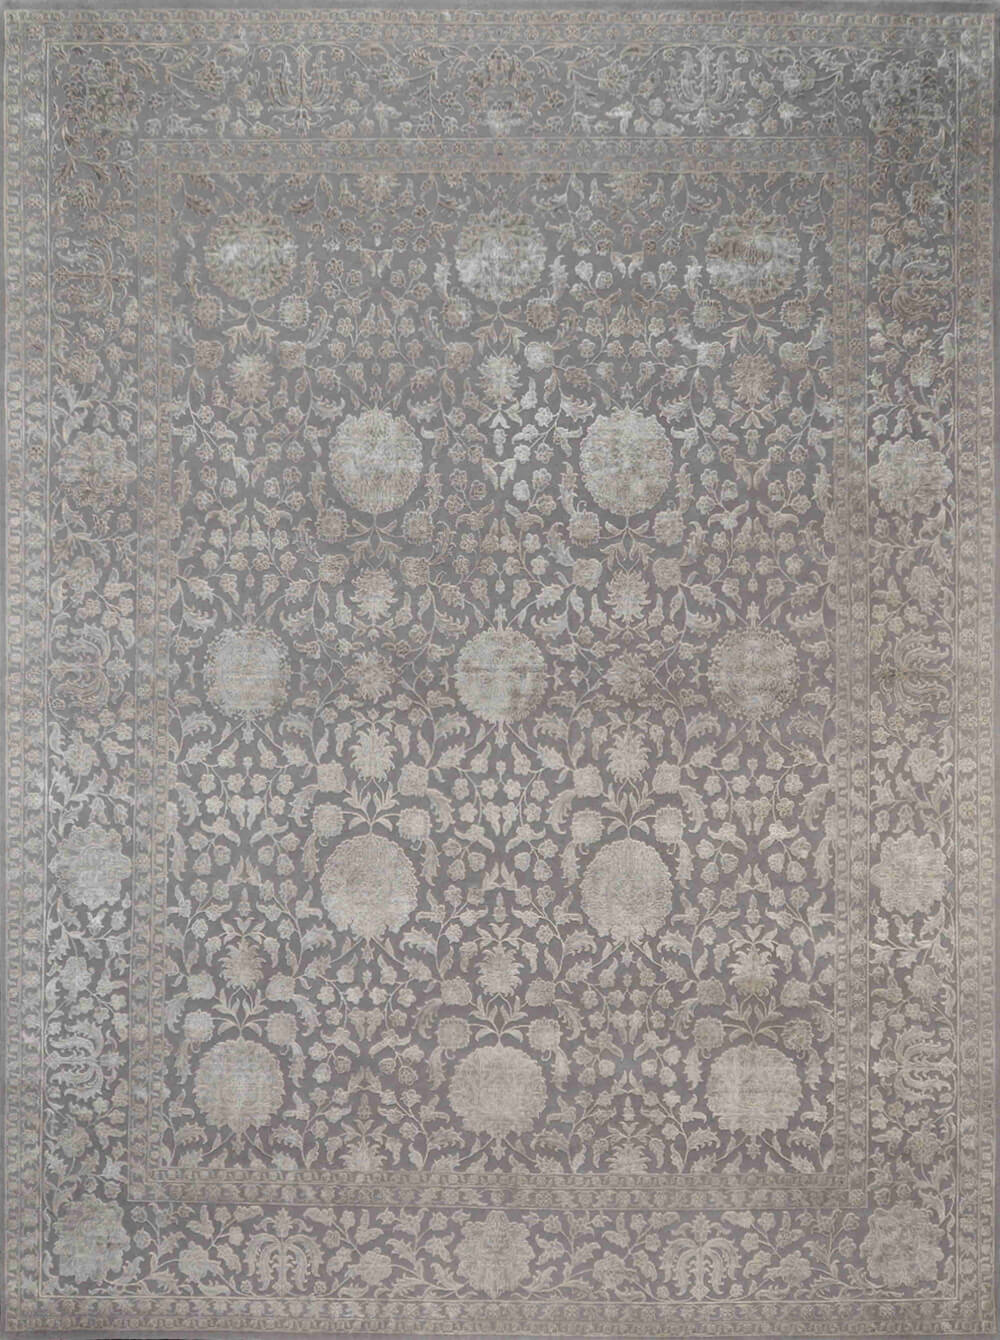 Sohan Rug ☞ Size: 300 x 400 cm